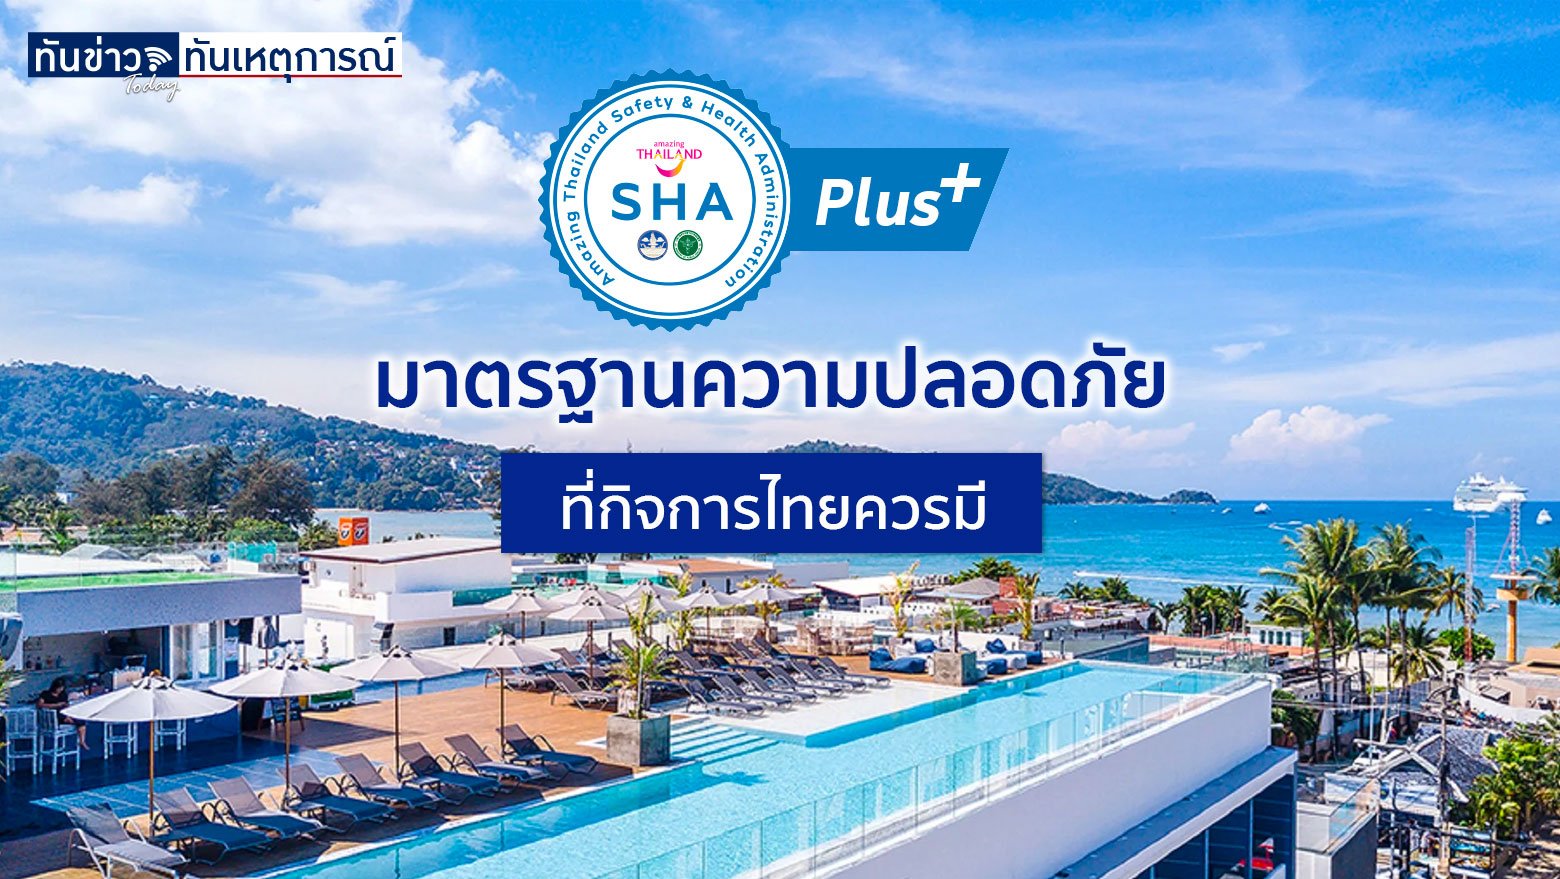 SHA+ มาตรฐานความปลอดภัยที่กิจการไทยควรมี